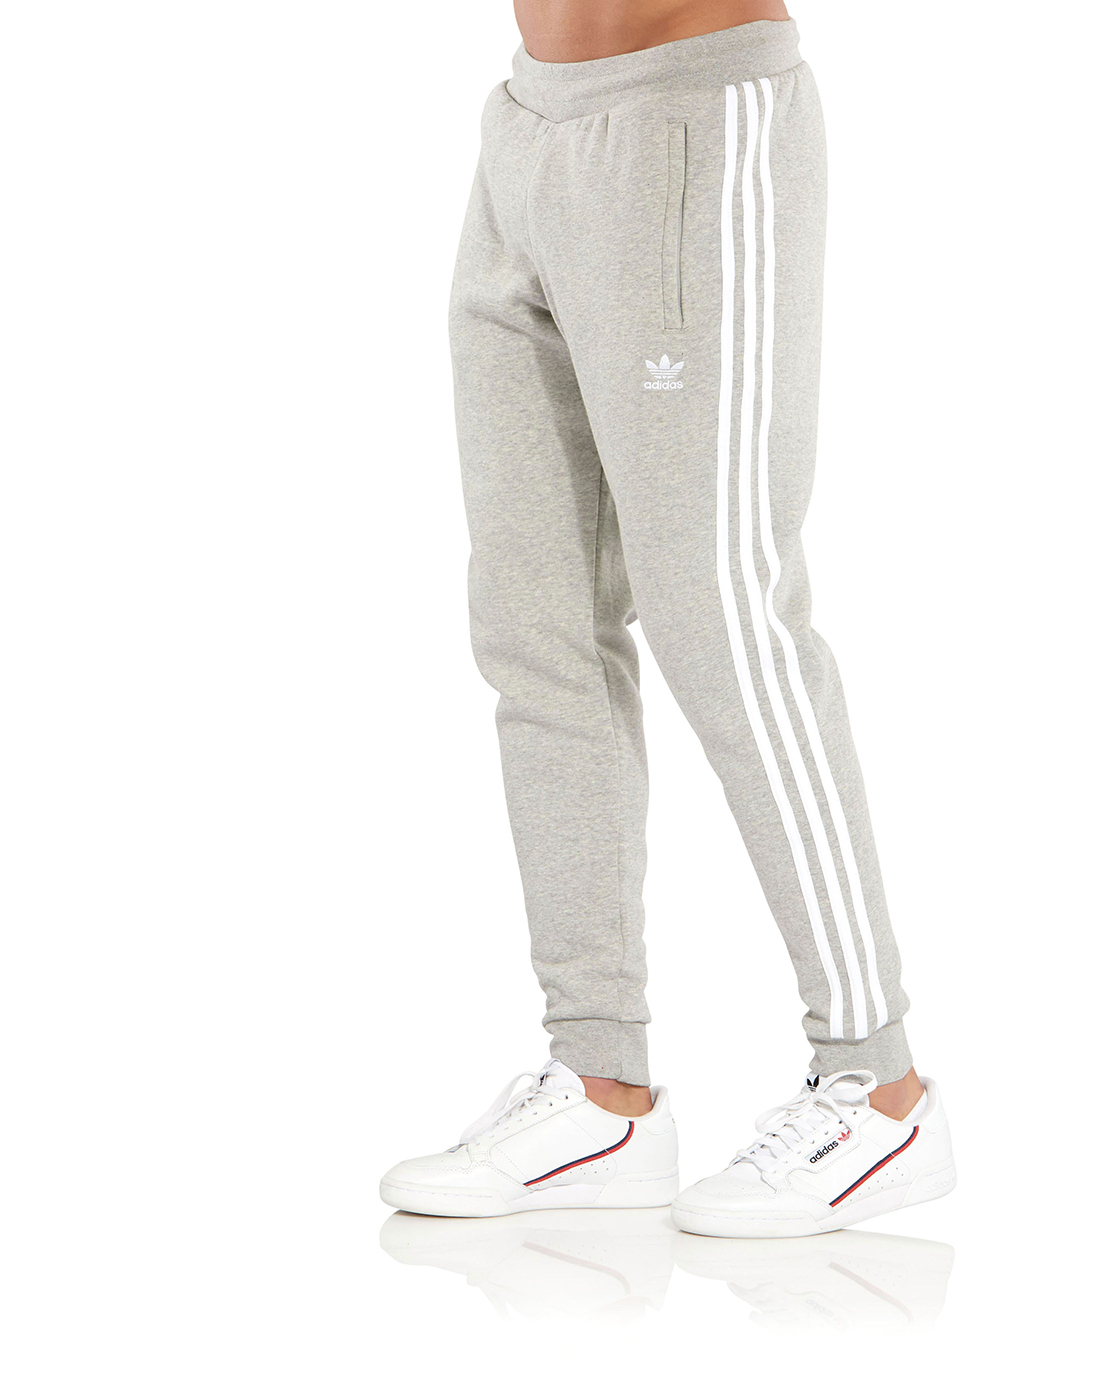 adidas Originals Mens 3-Stripes Joggers - Grey | Life Style Sports IE